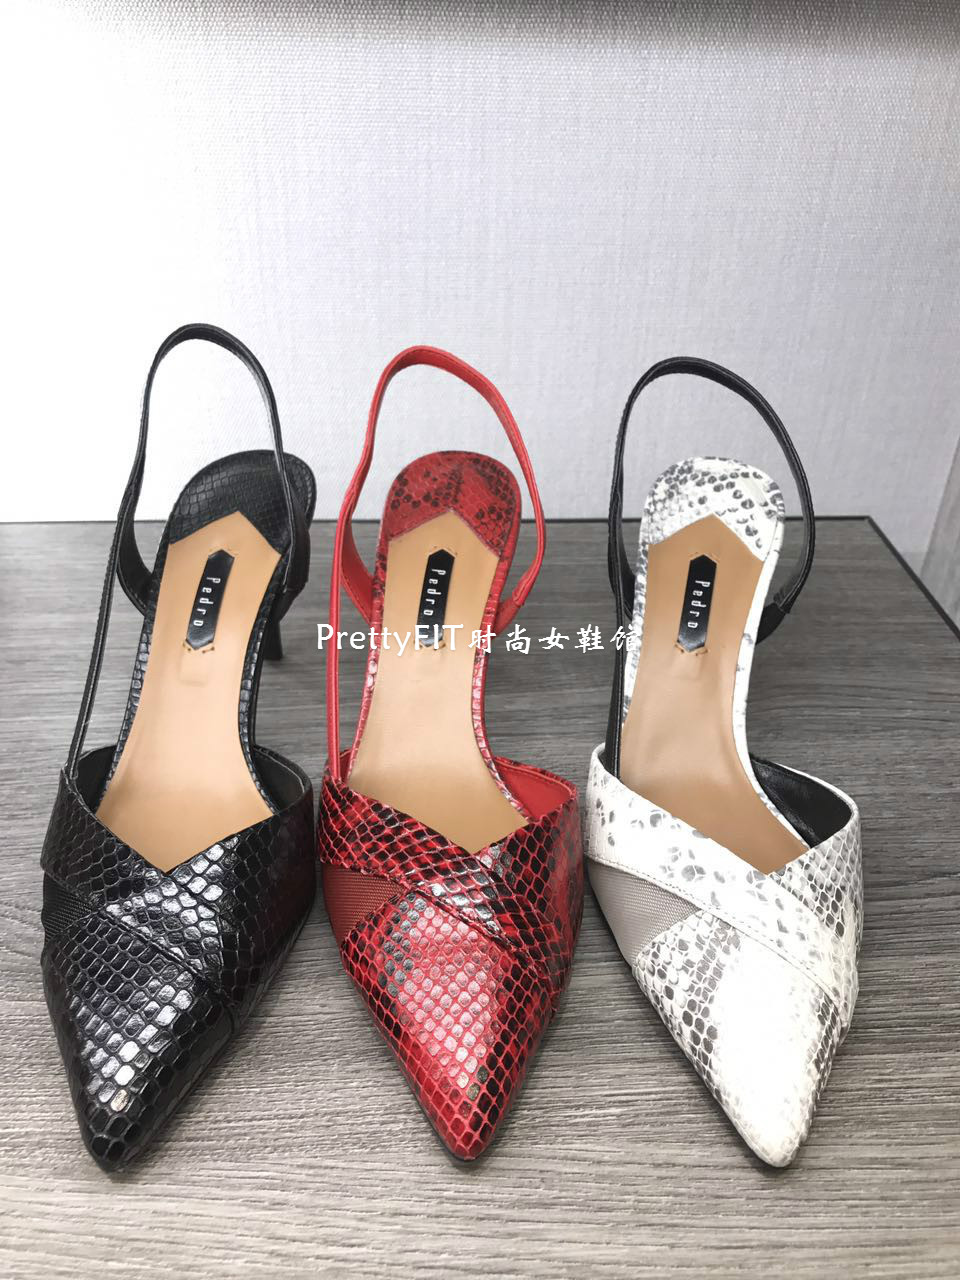 pedro新加坡专柜正品代购新款蛇纹拼接性感尖头单鞋时尚 女鞋